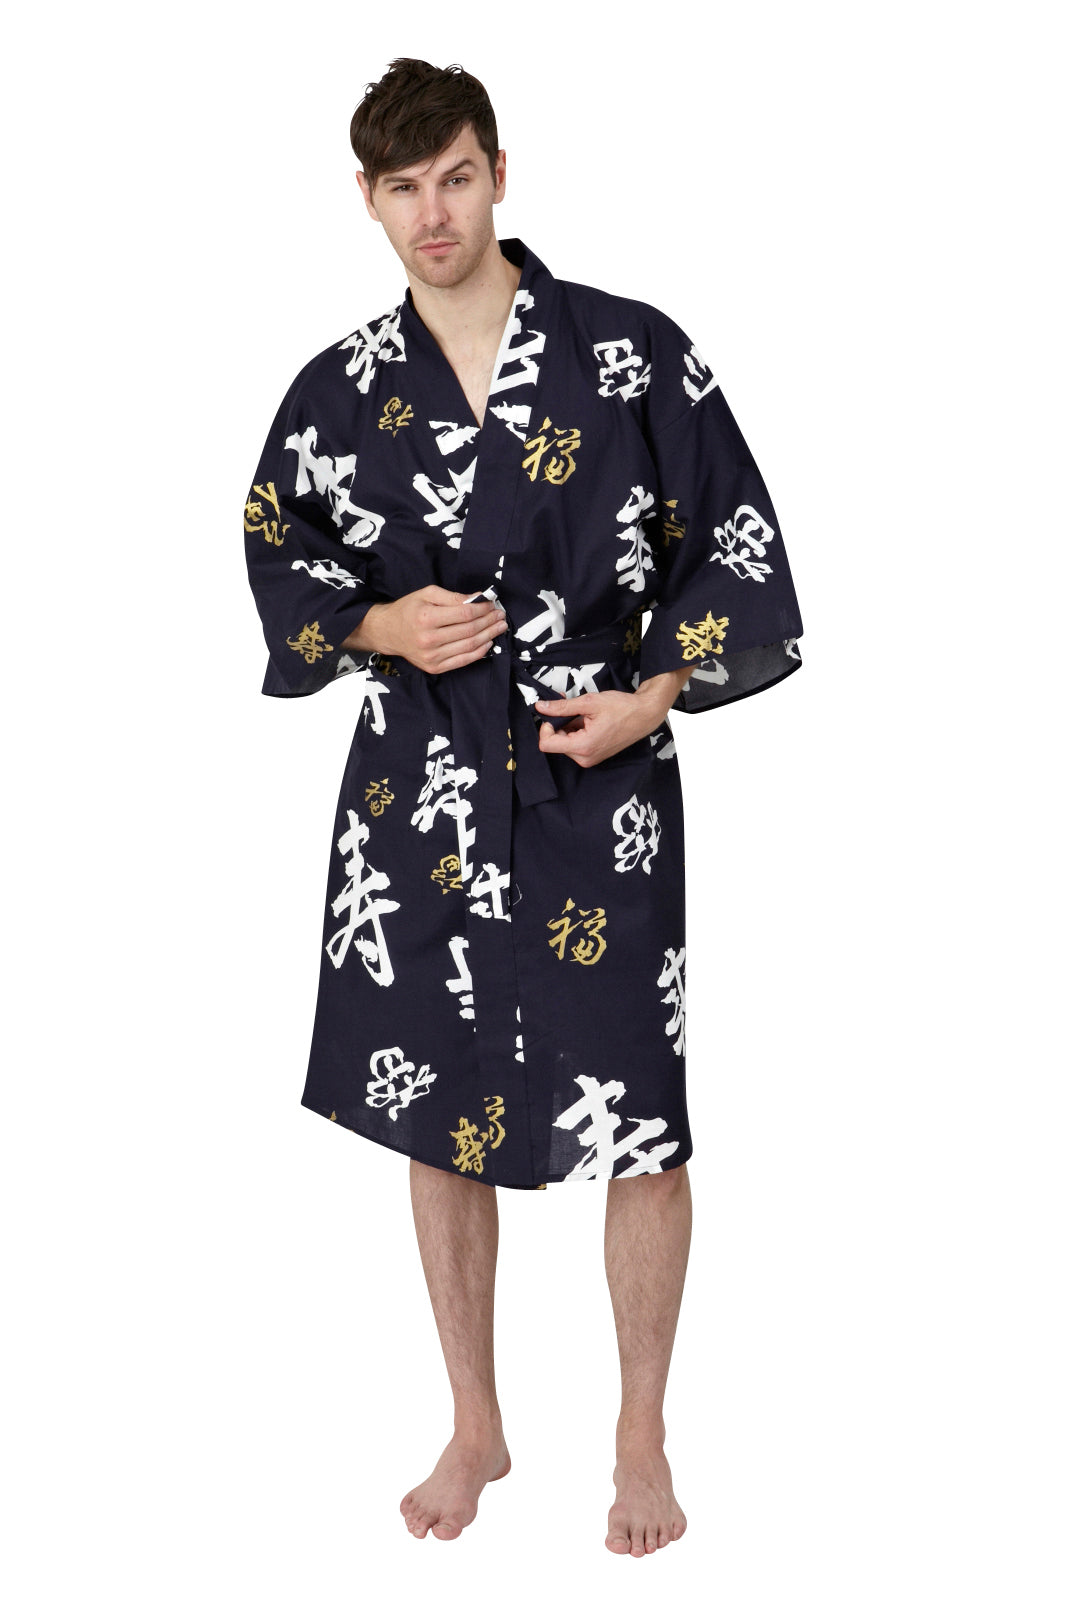 Happi Kimono, Japanese kimono, Japanese costume, Japanese